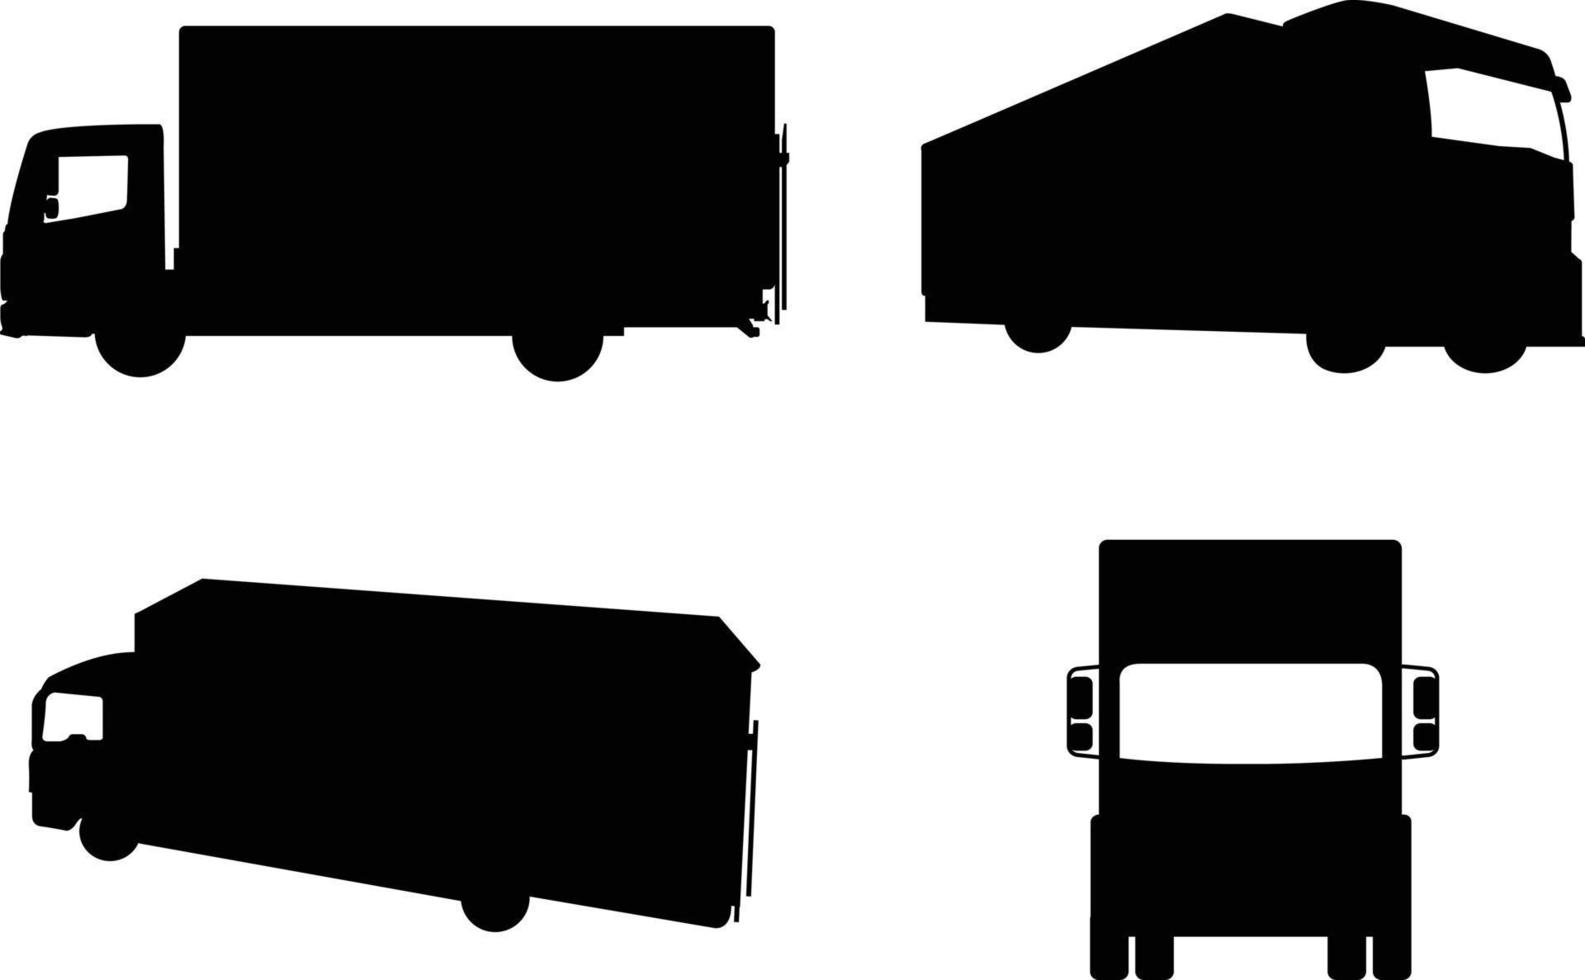 en vektor samling av lastbils i en siffra av perspektiv